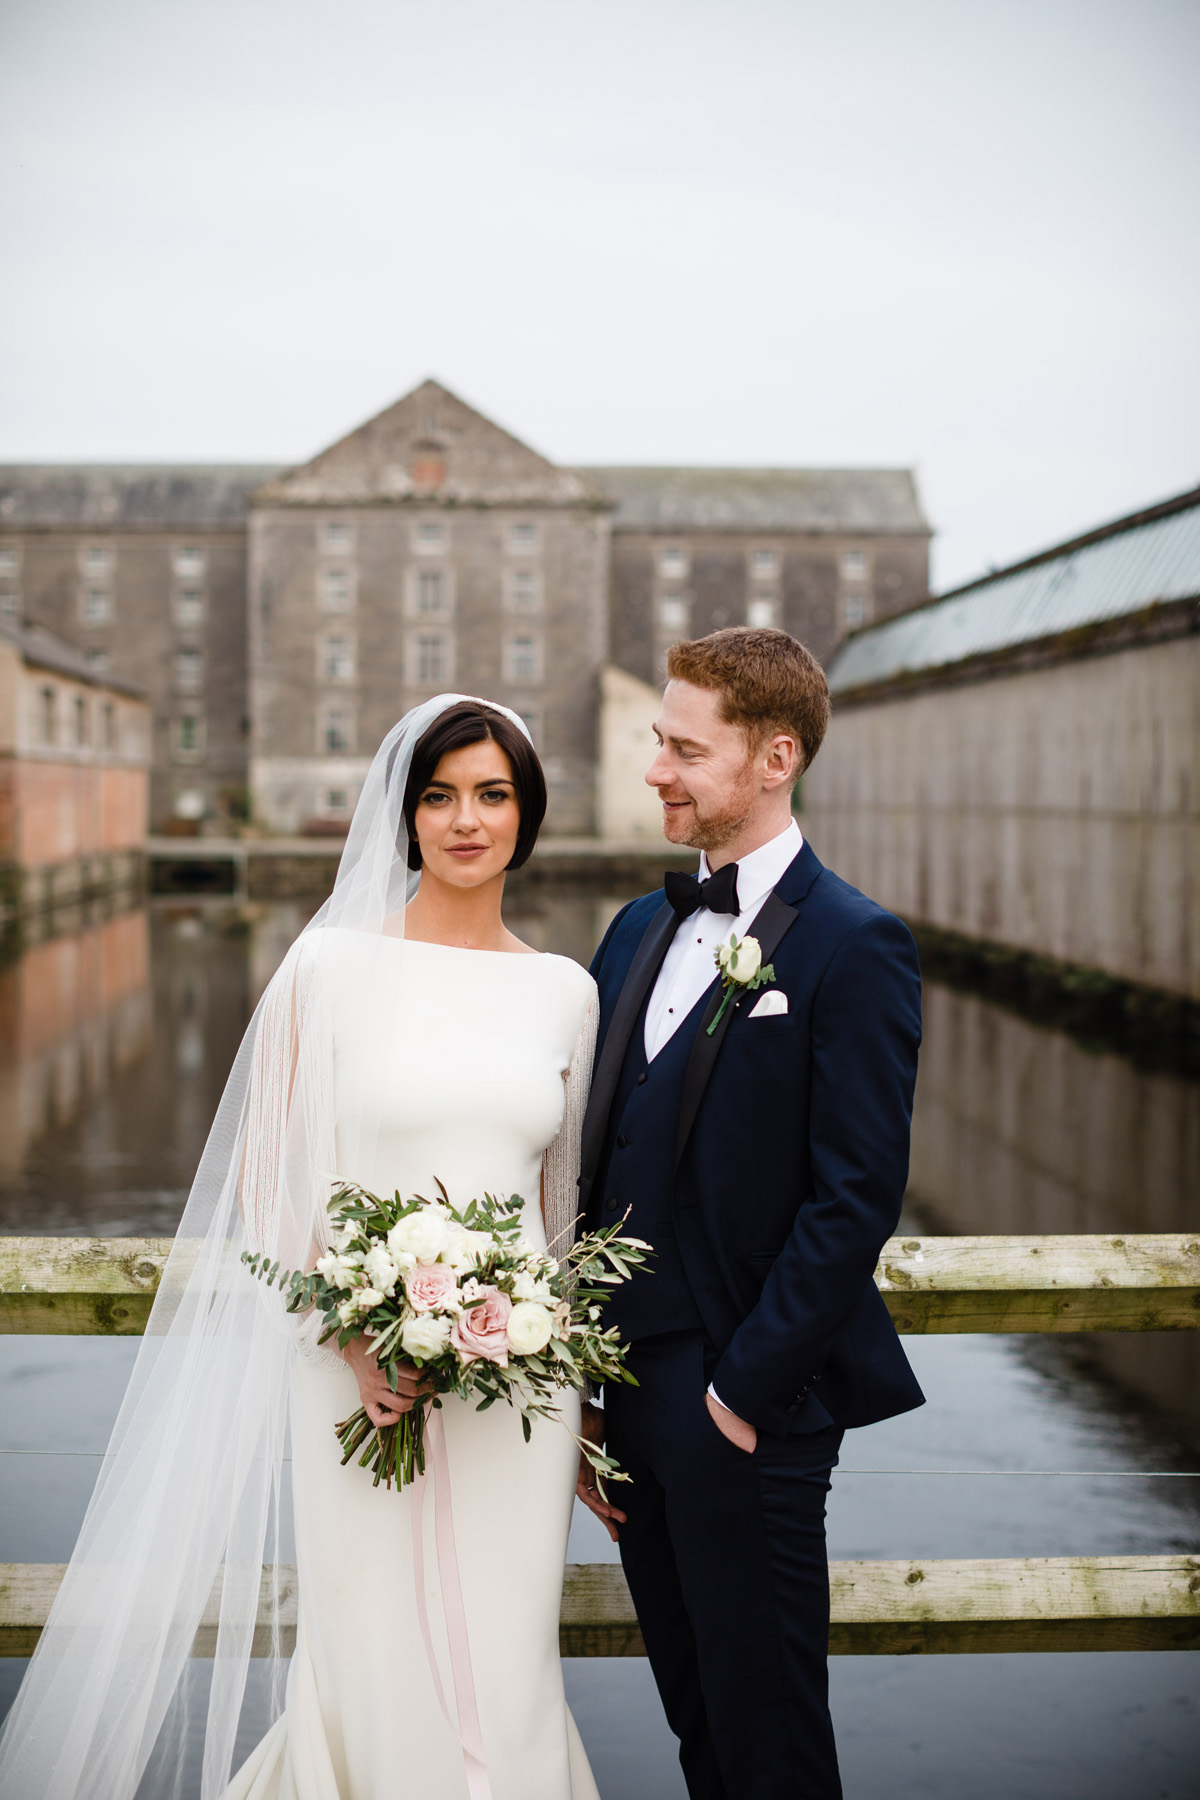 165 Millhouse Wedding In Ireland Atelier Pronovias